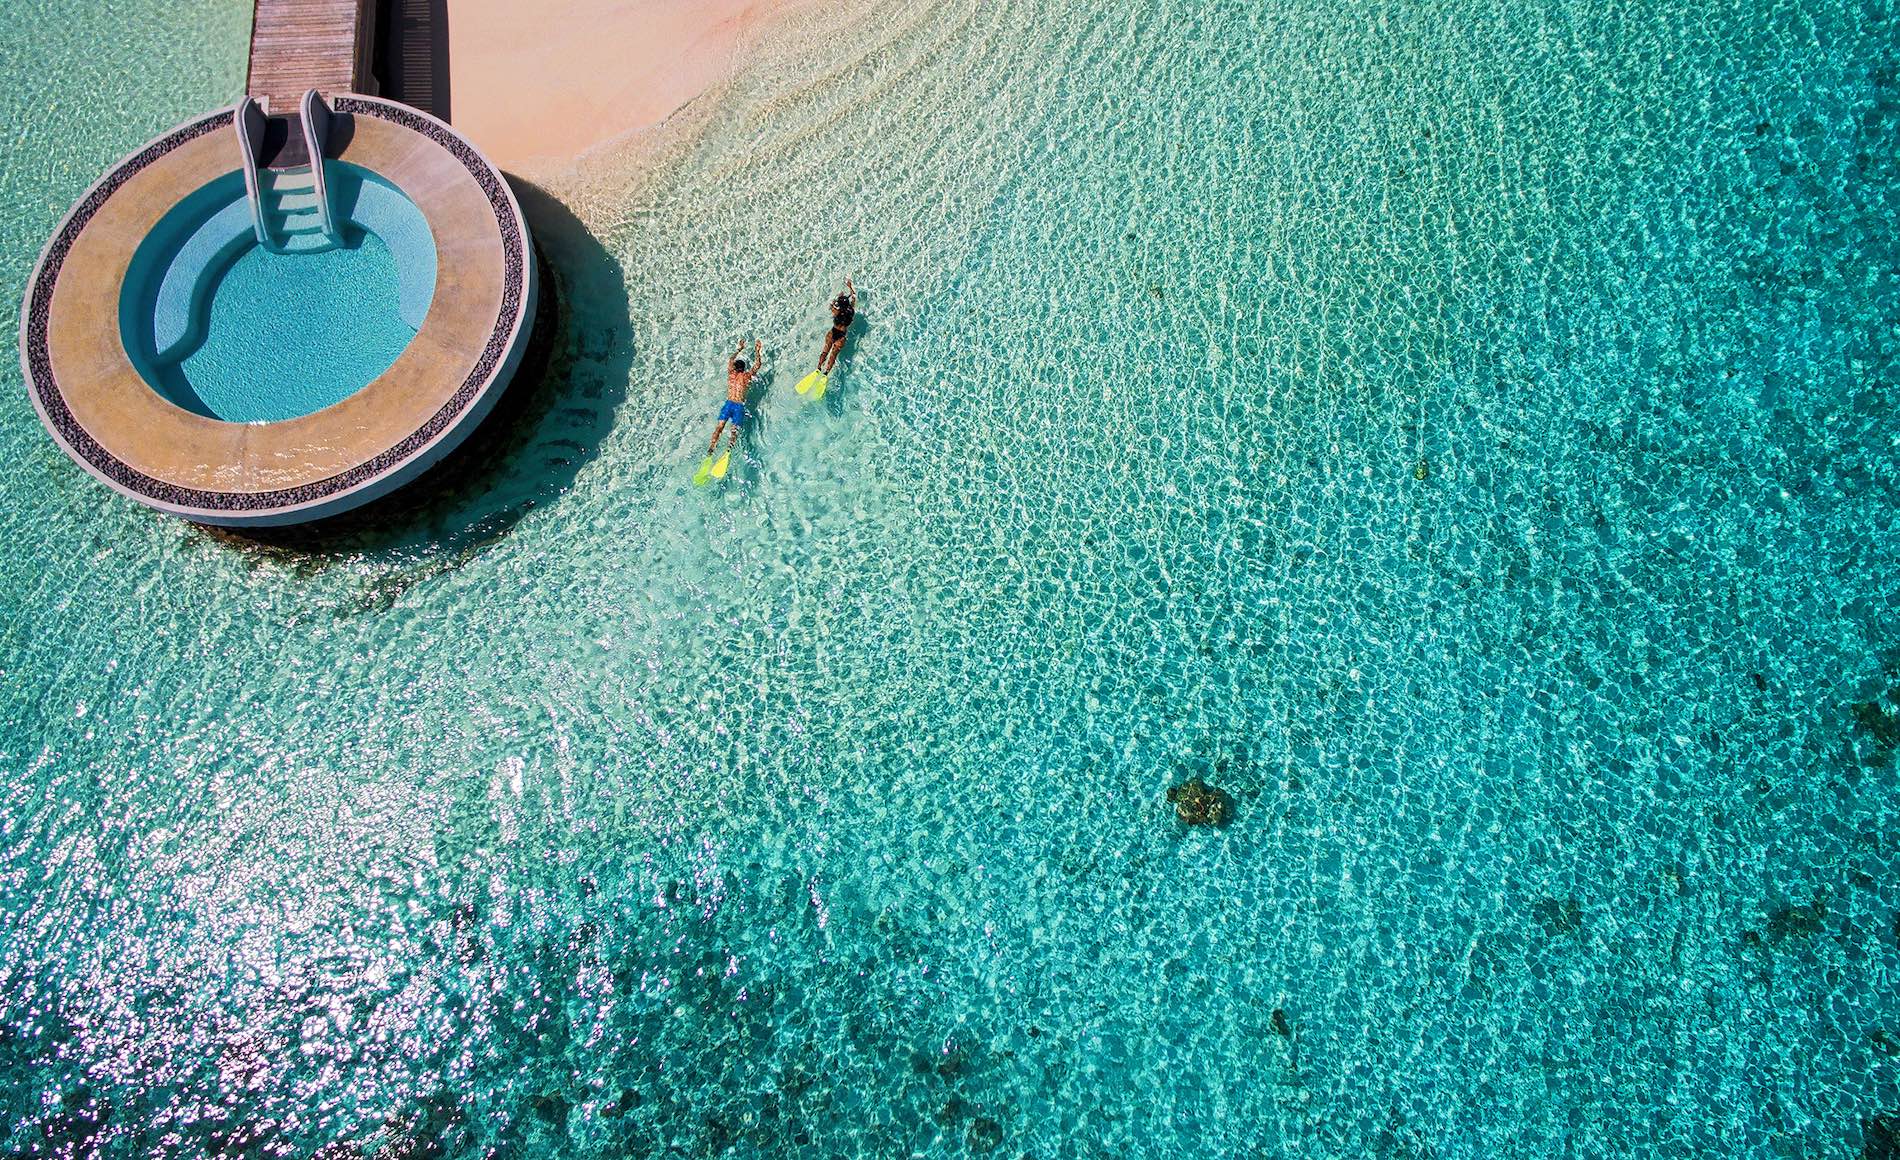 Huvafen Fushi Maldives